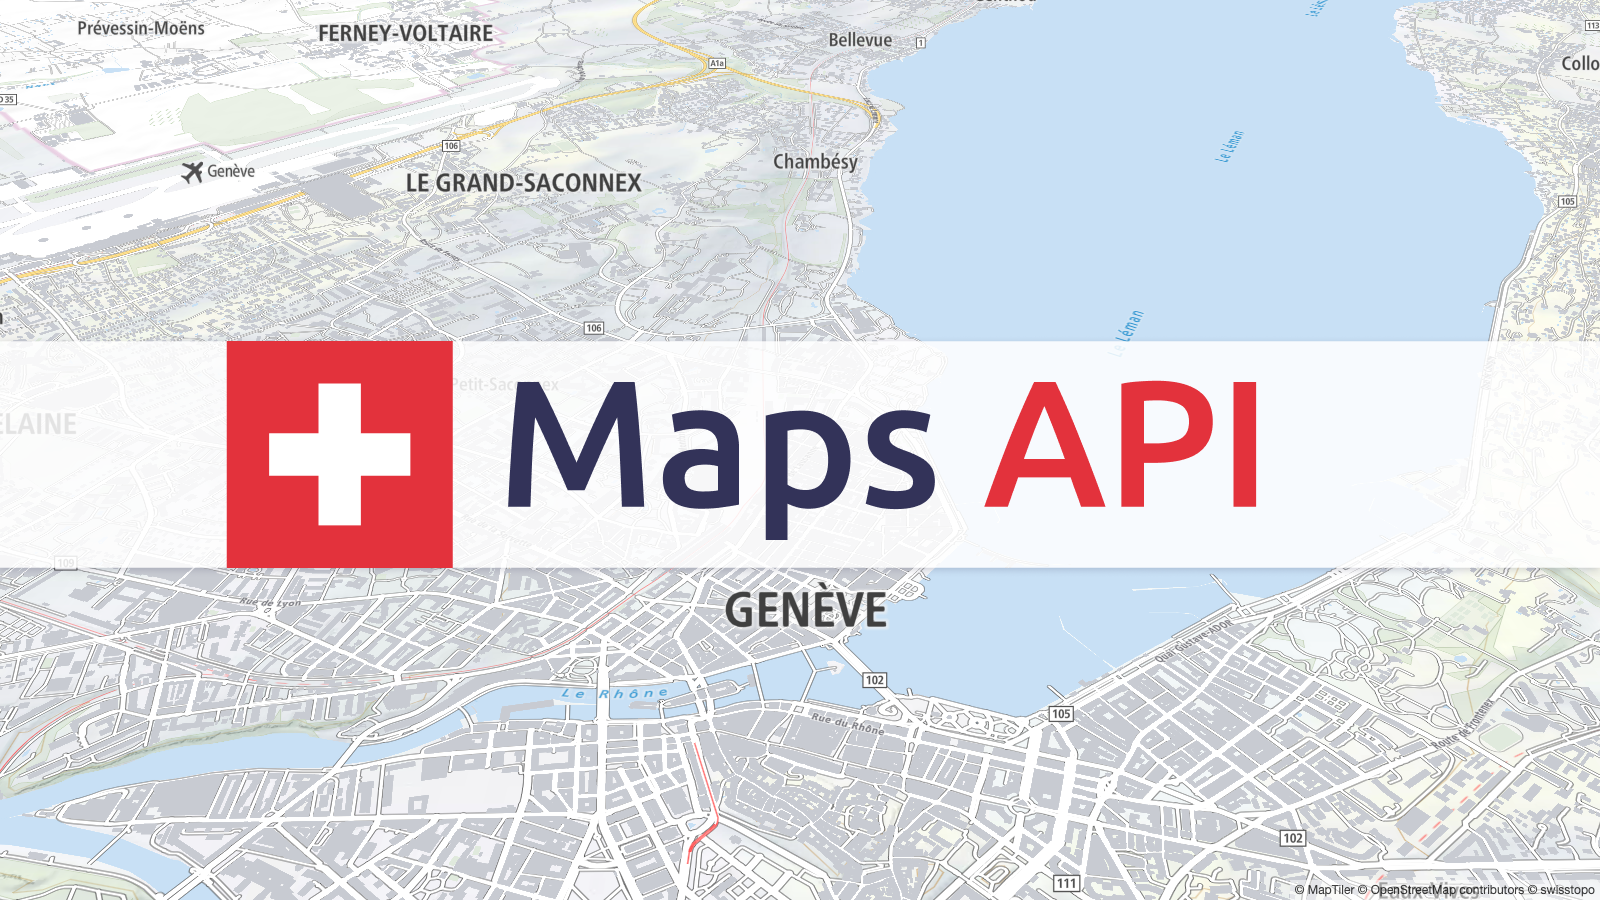 Swisstopo maps via API or offline image